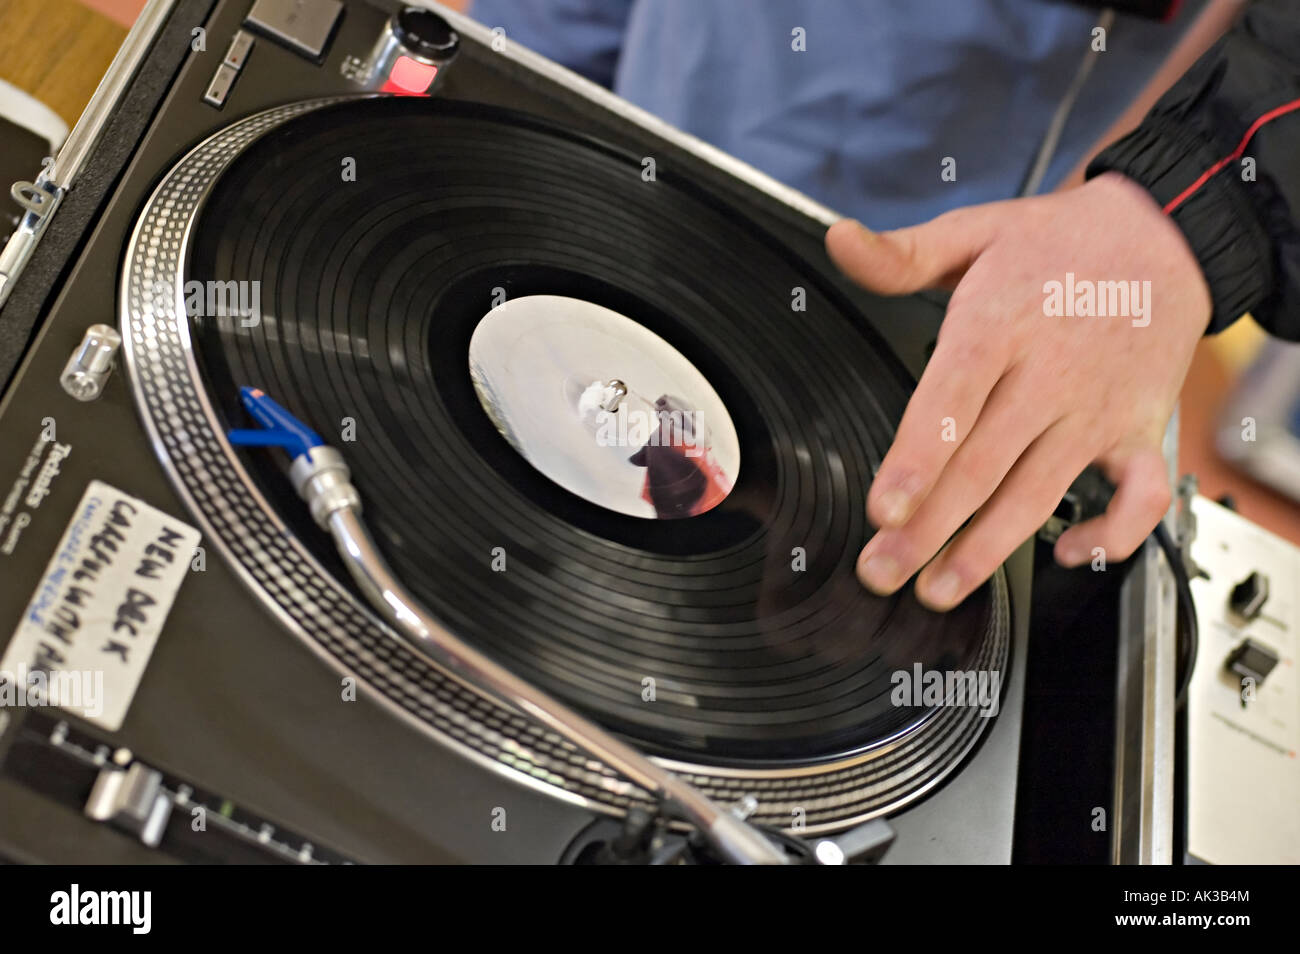 a dj mixing records on some decks Stock Photo